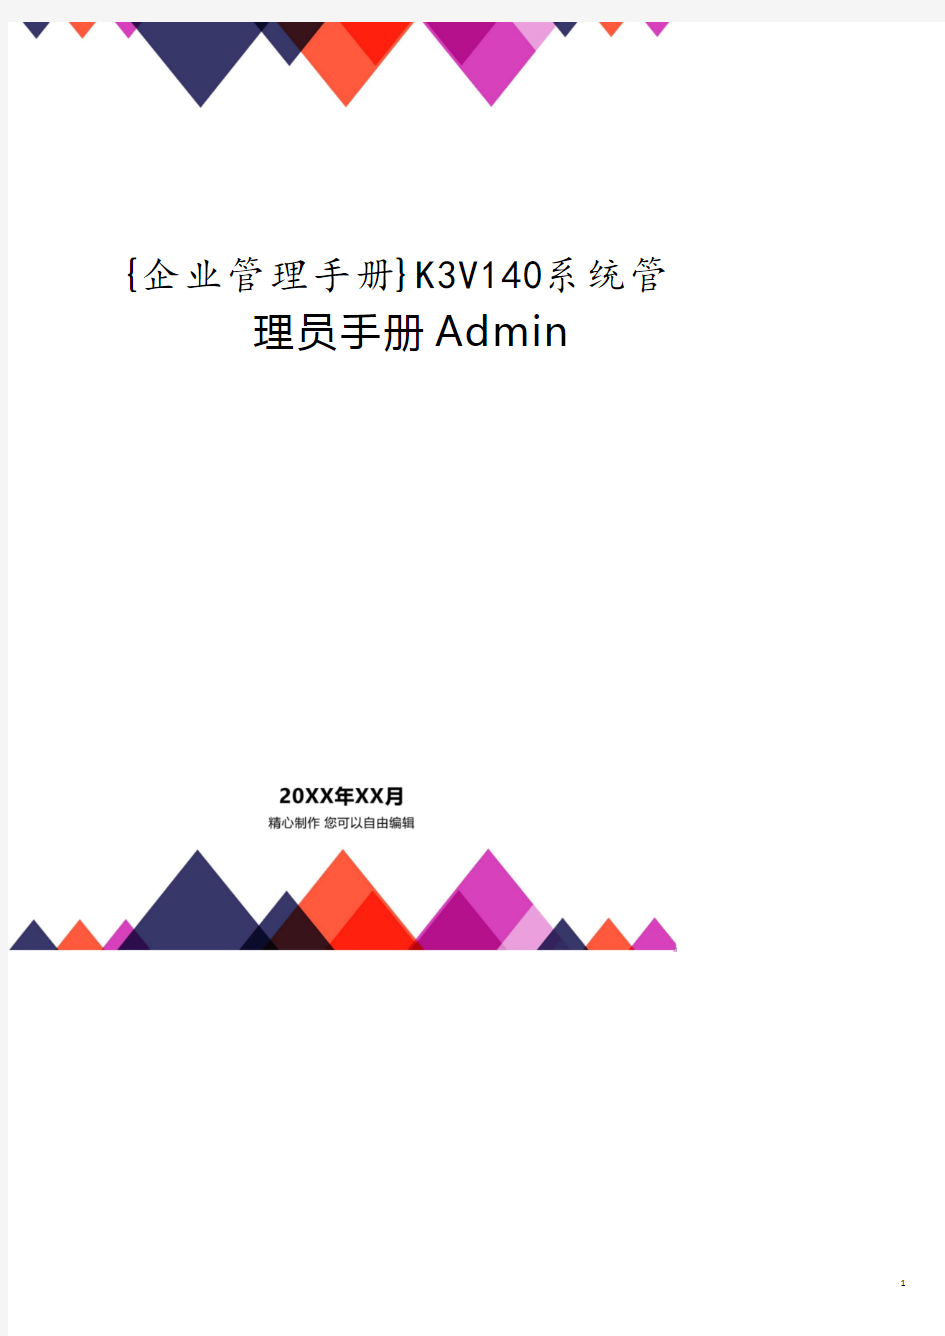 K3V140系统管理员手册Admin.pdf